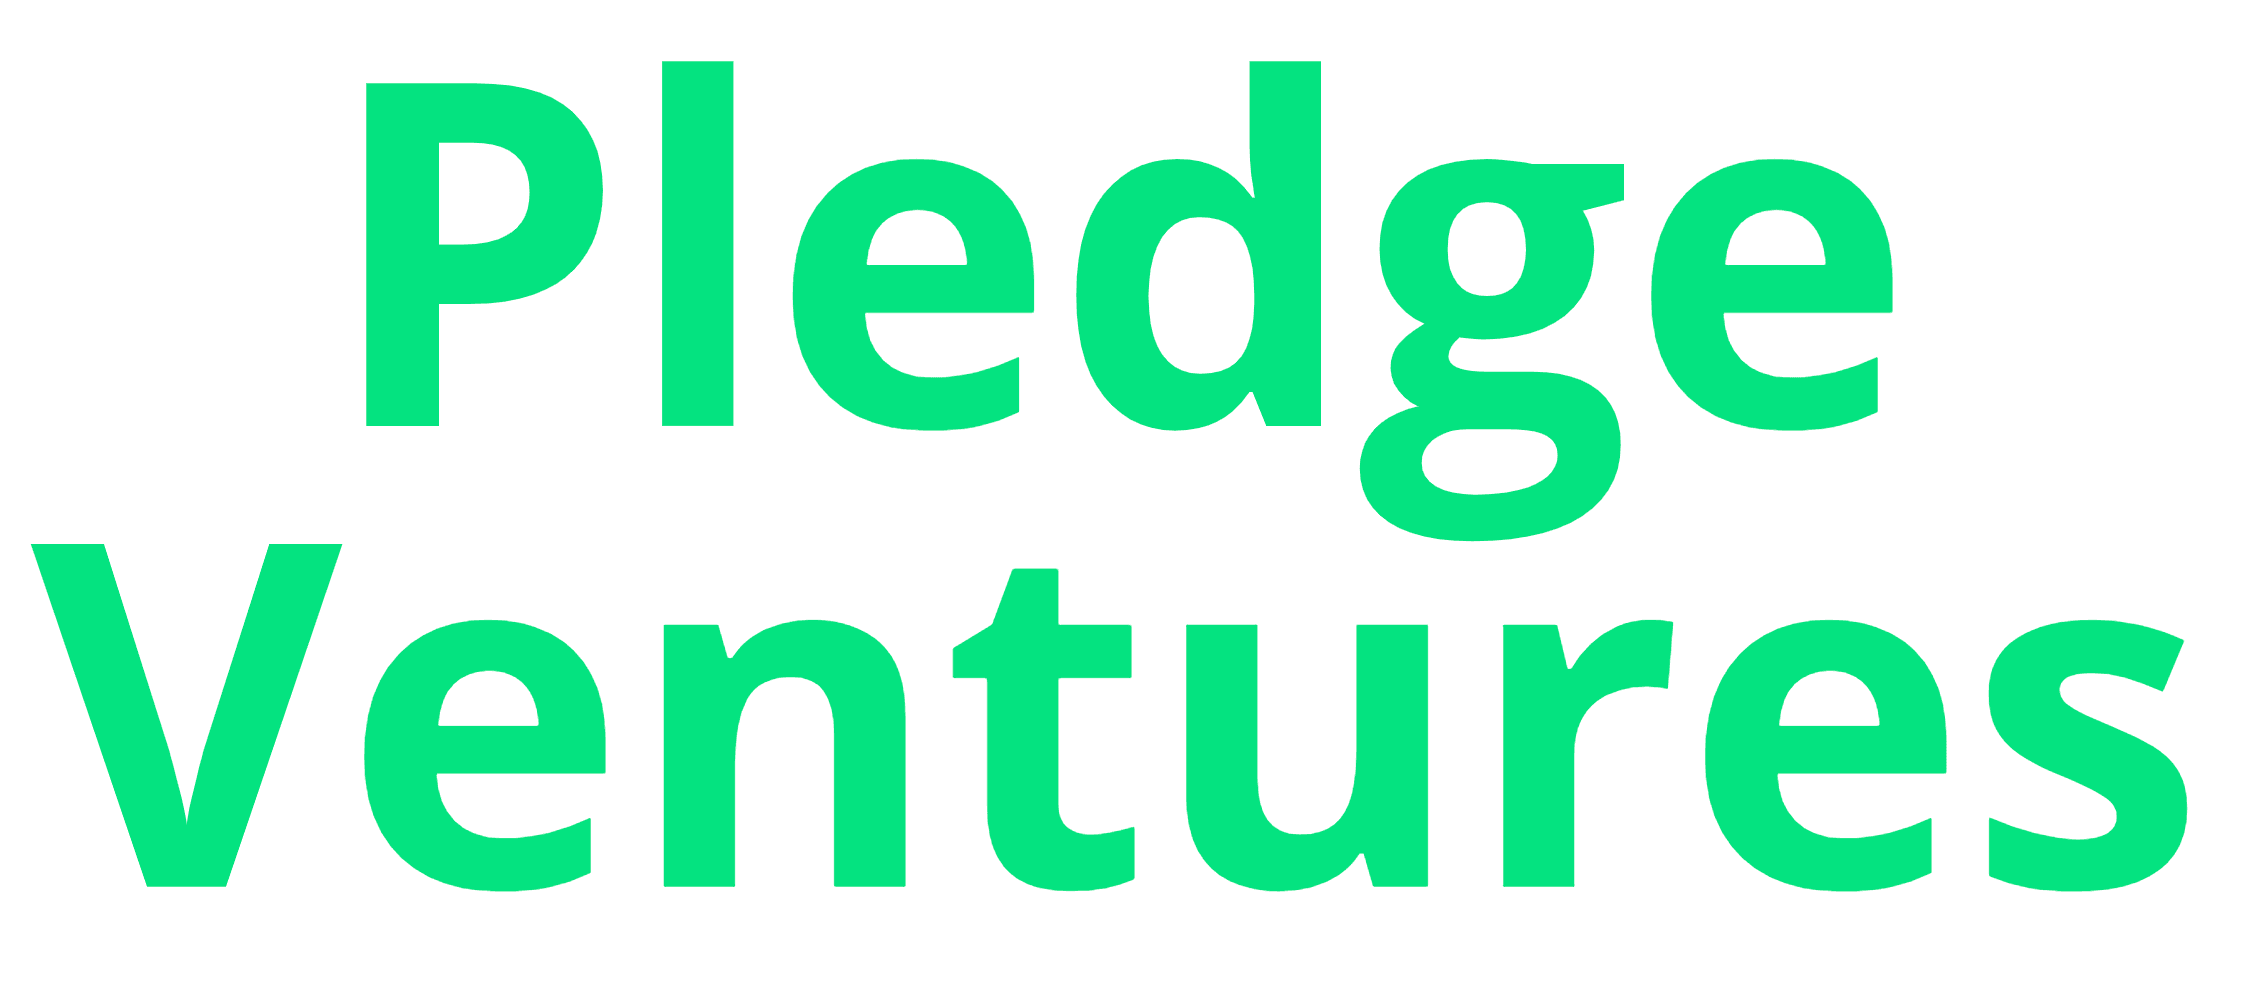 Pledge Ventures